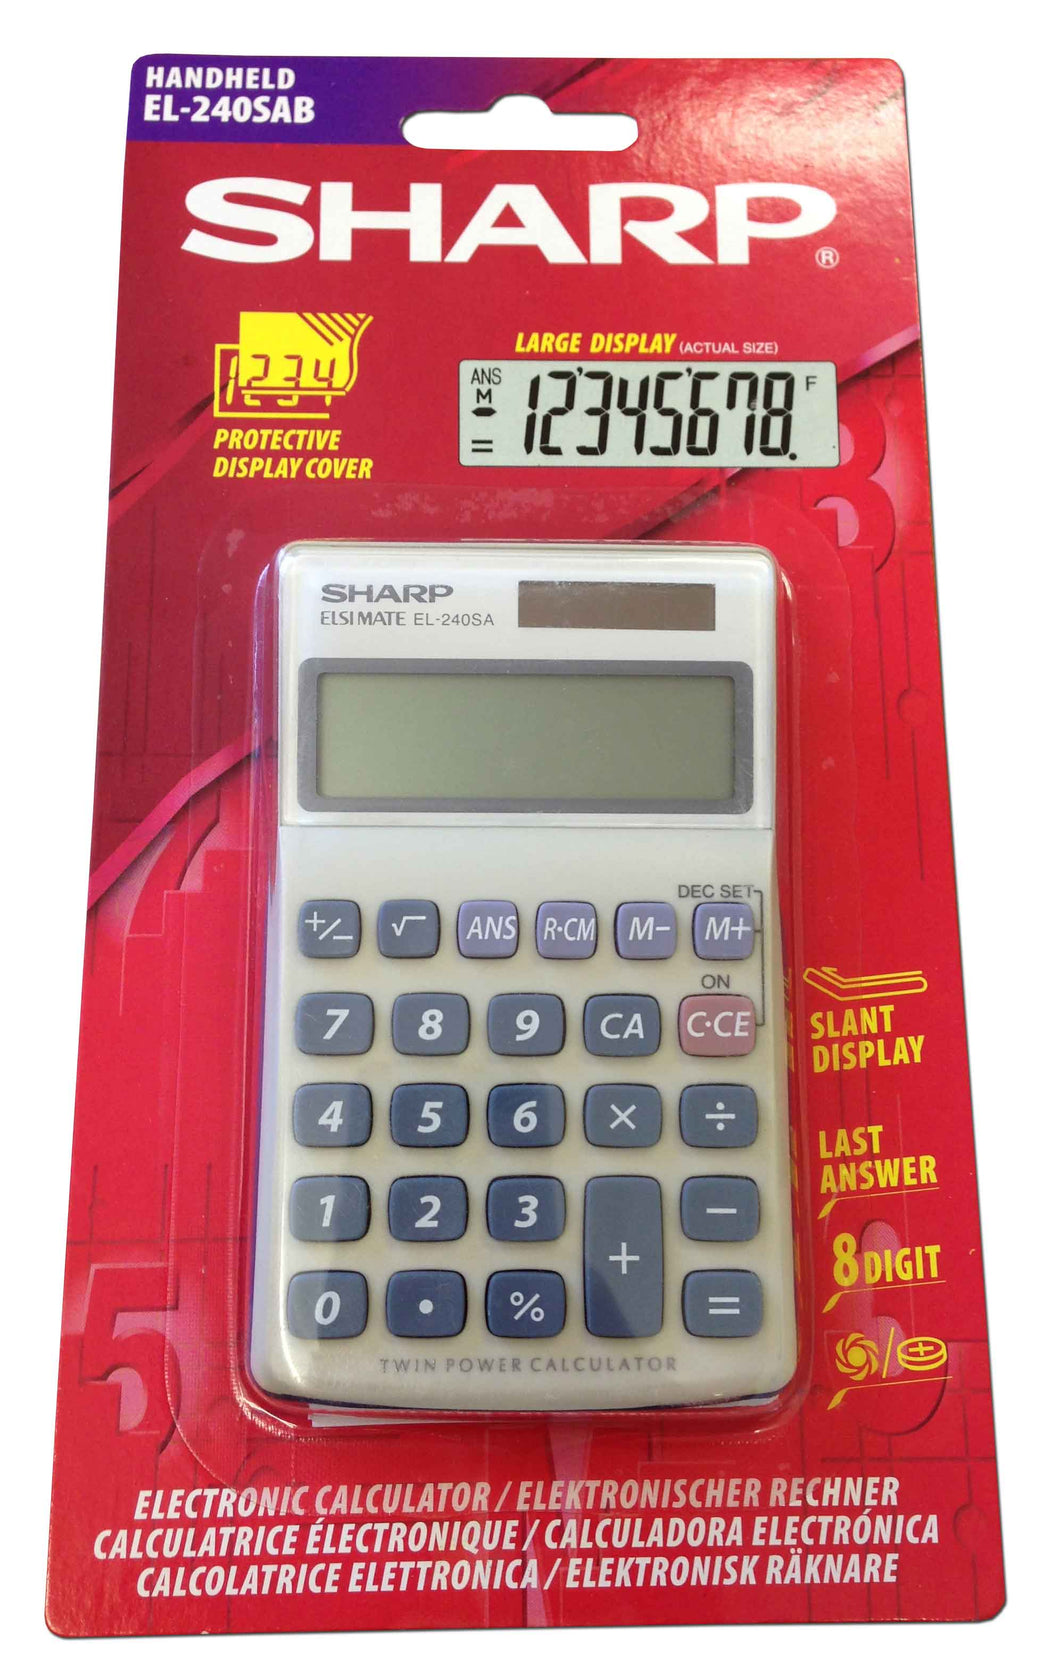 Calculator - Sharp EL 240SAB